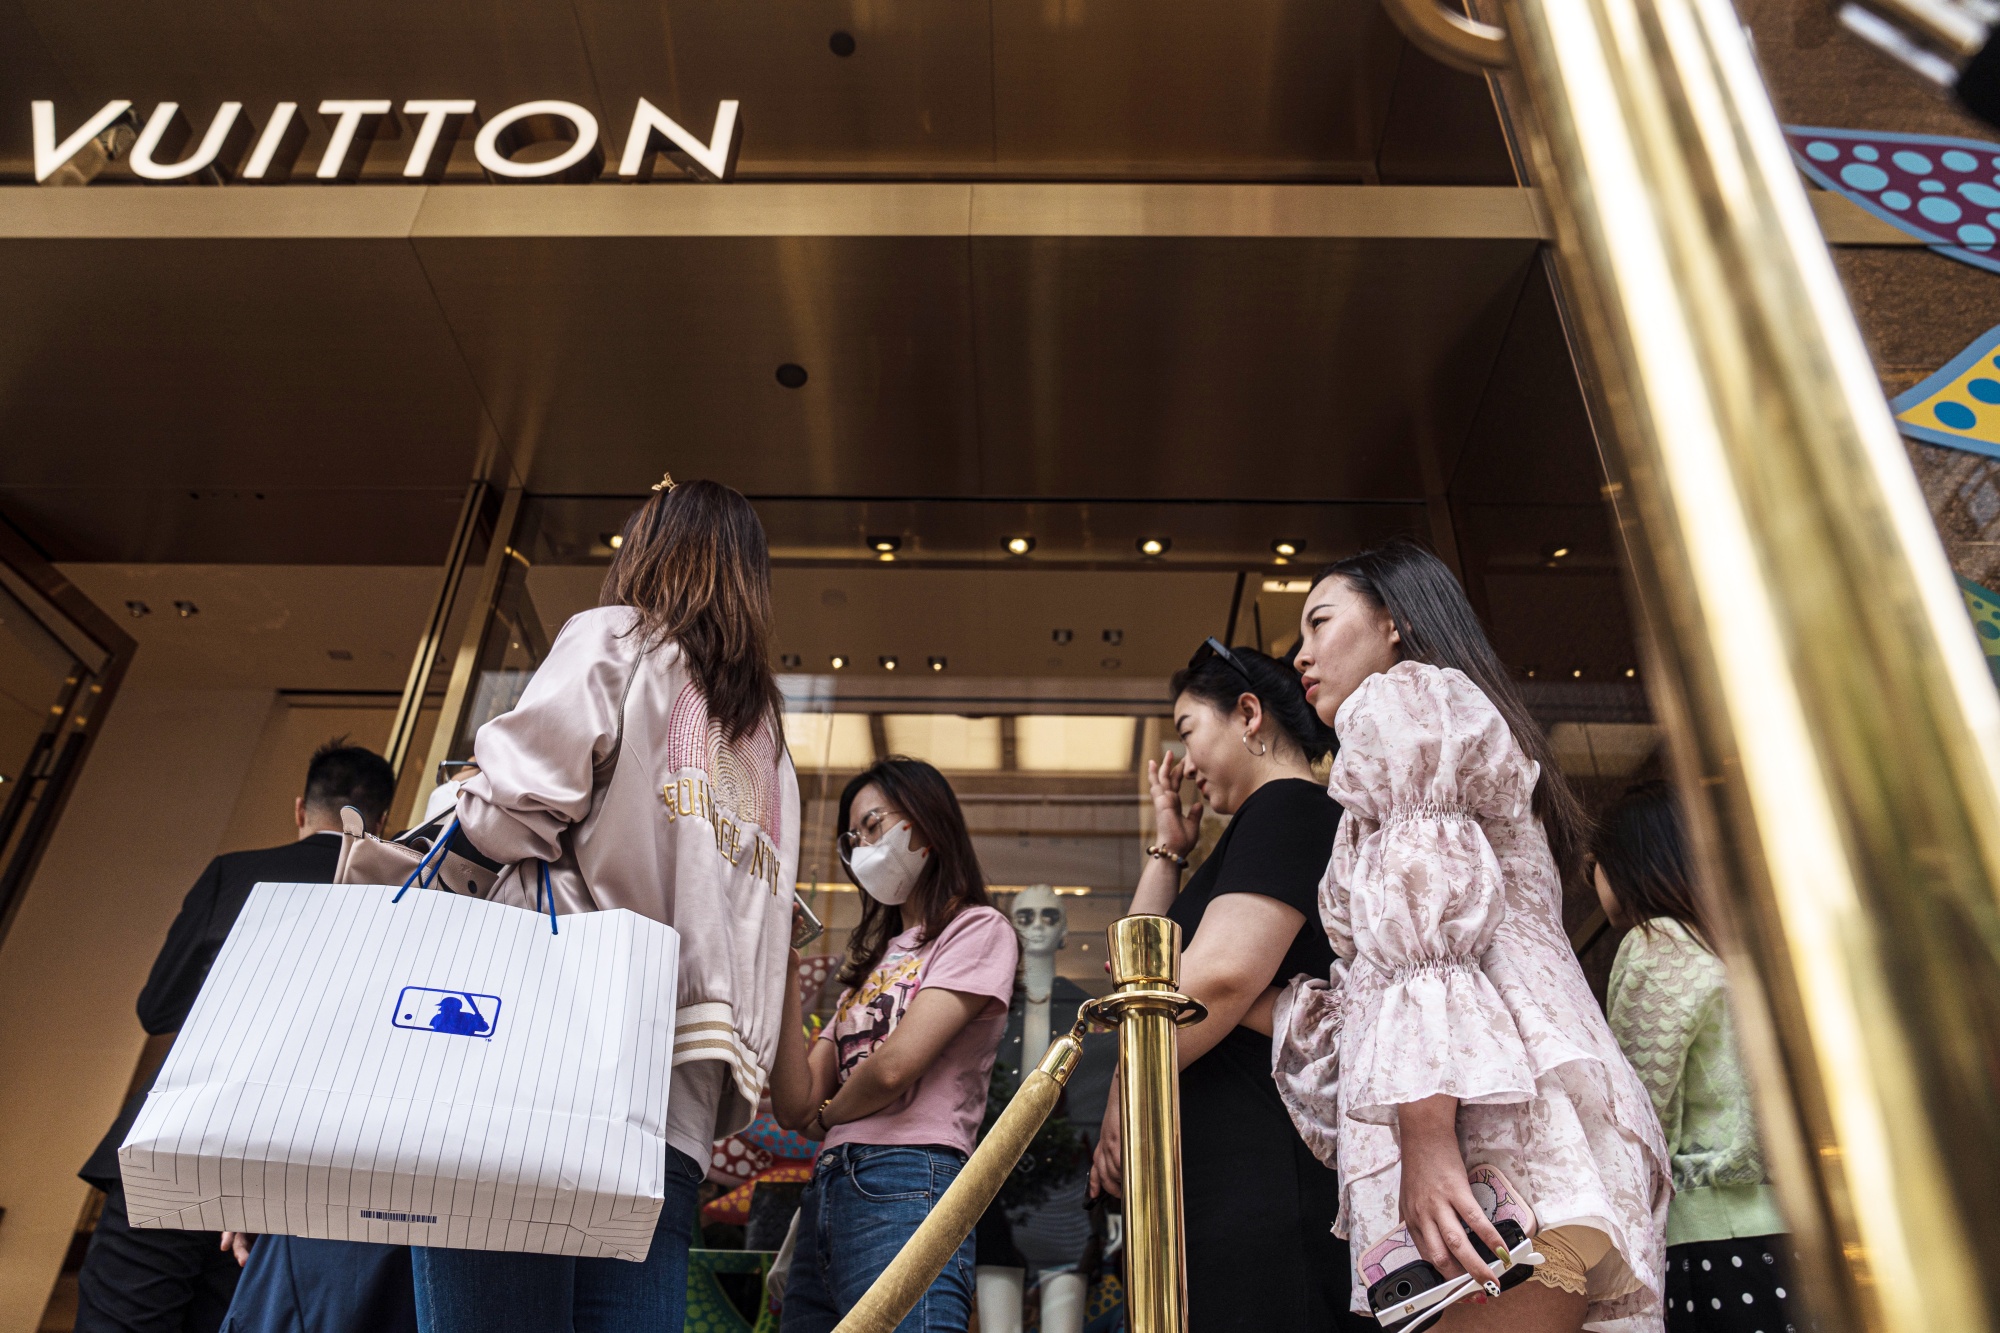 Louis Vuitton shop at China World Trade Center Beijing China 22